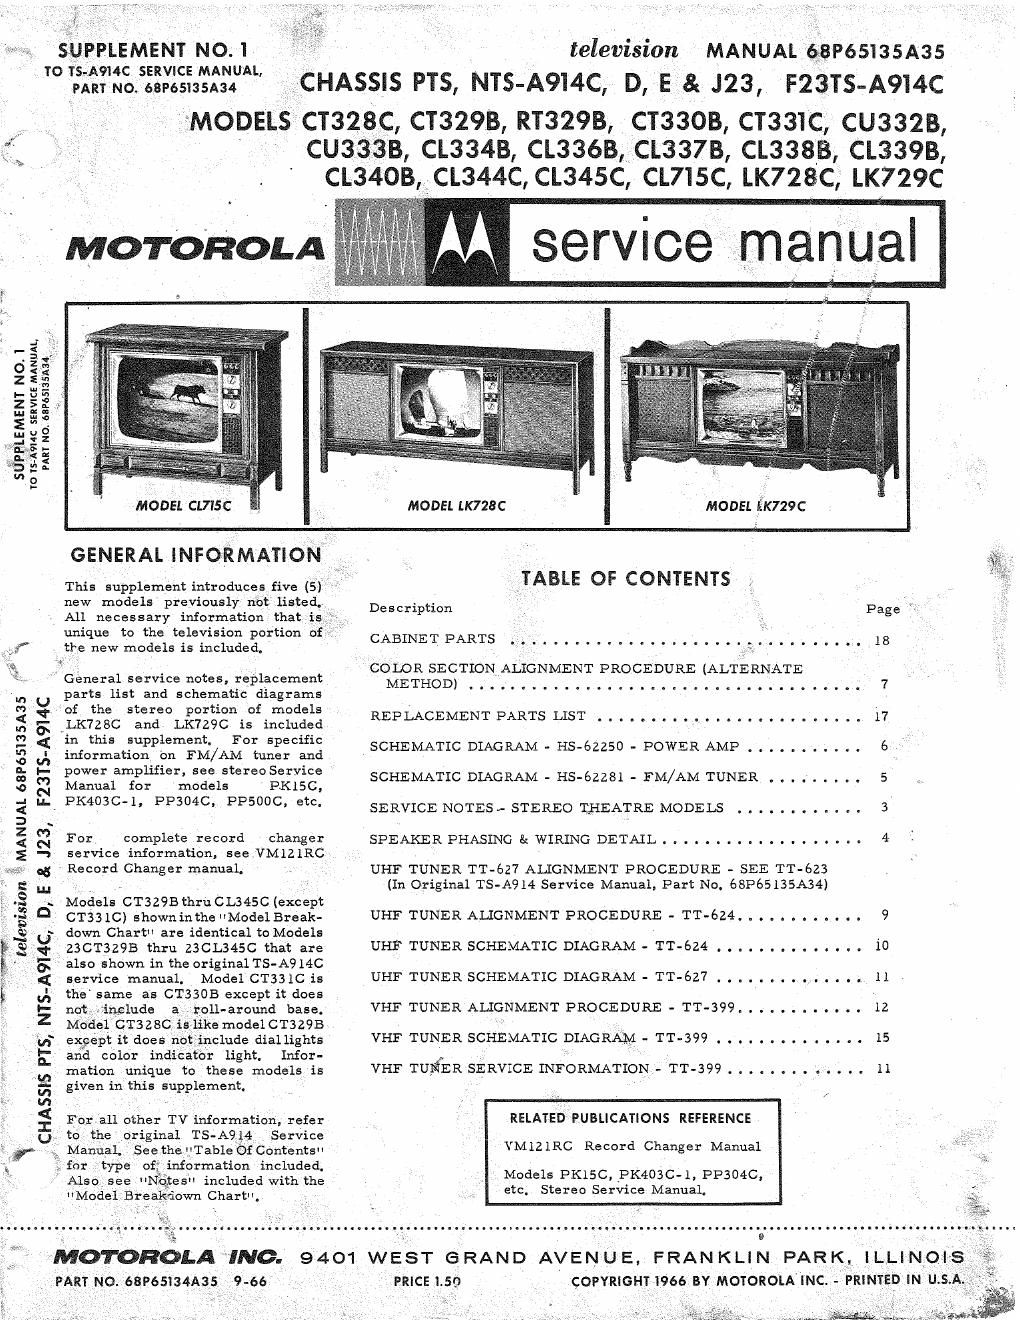 motorola cu 333 b service manual